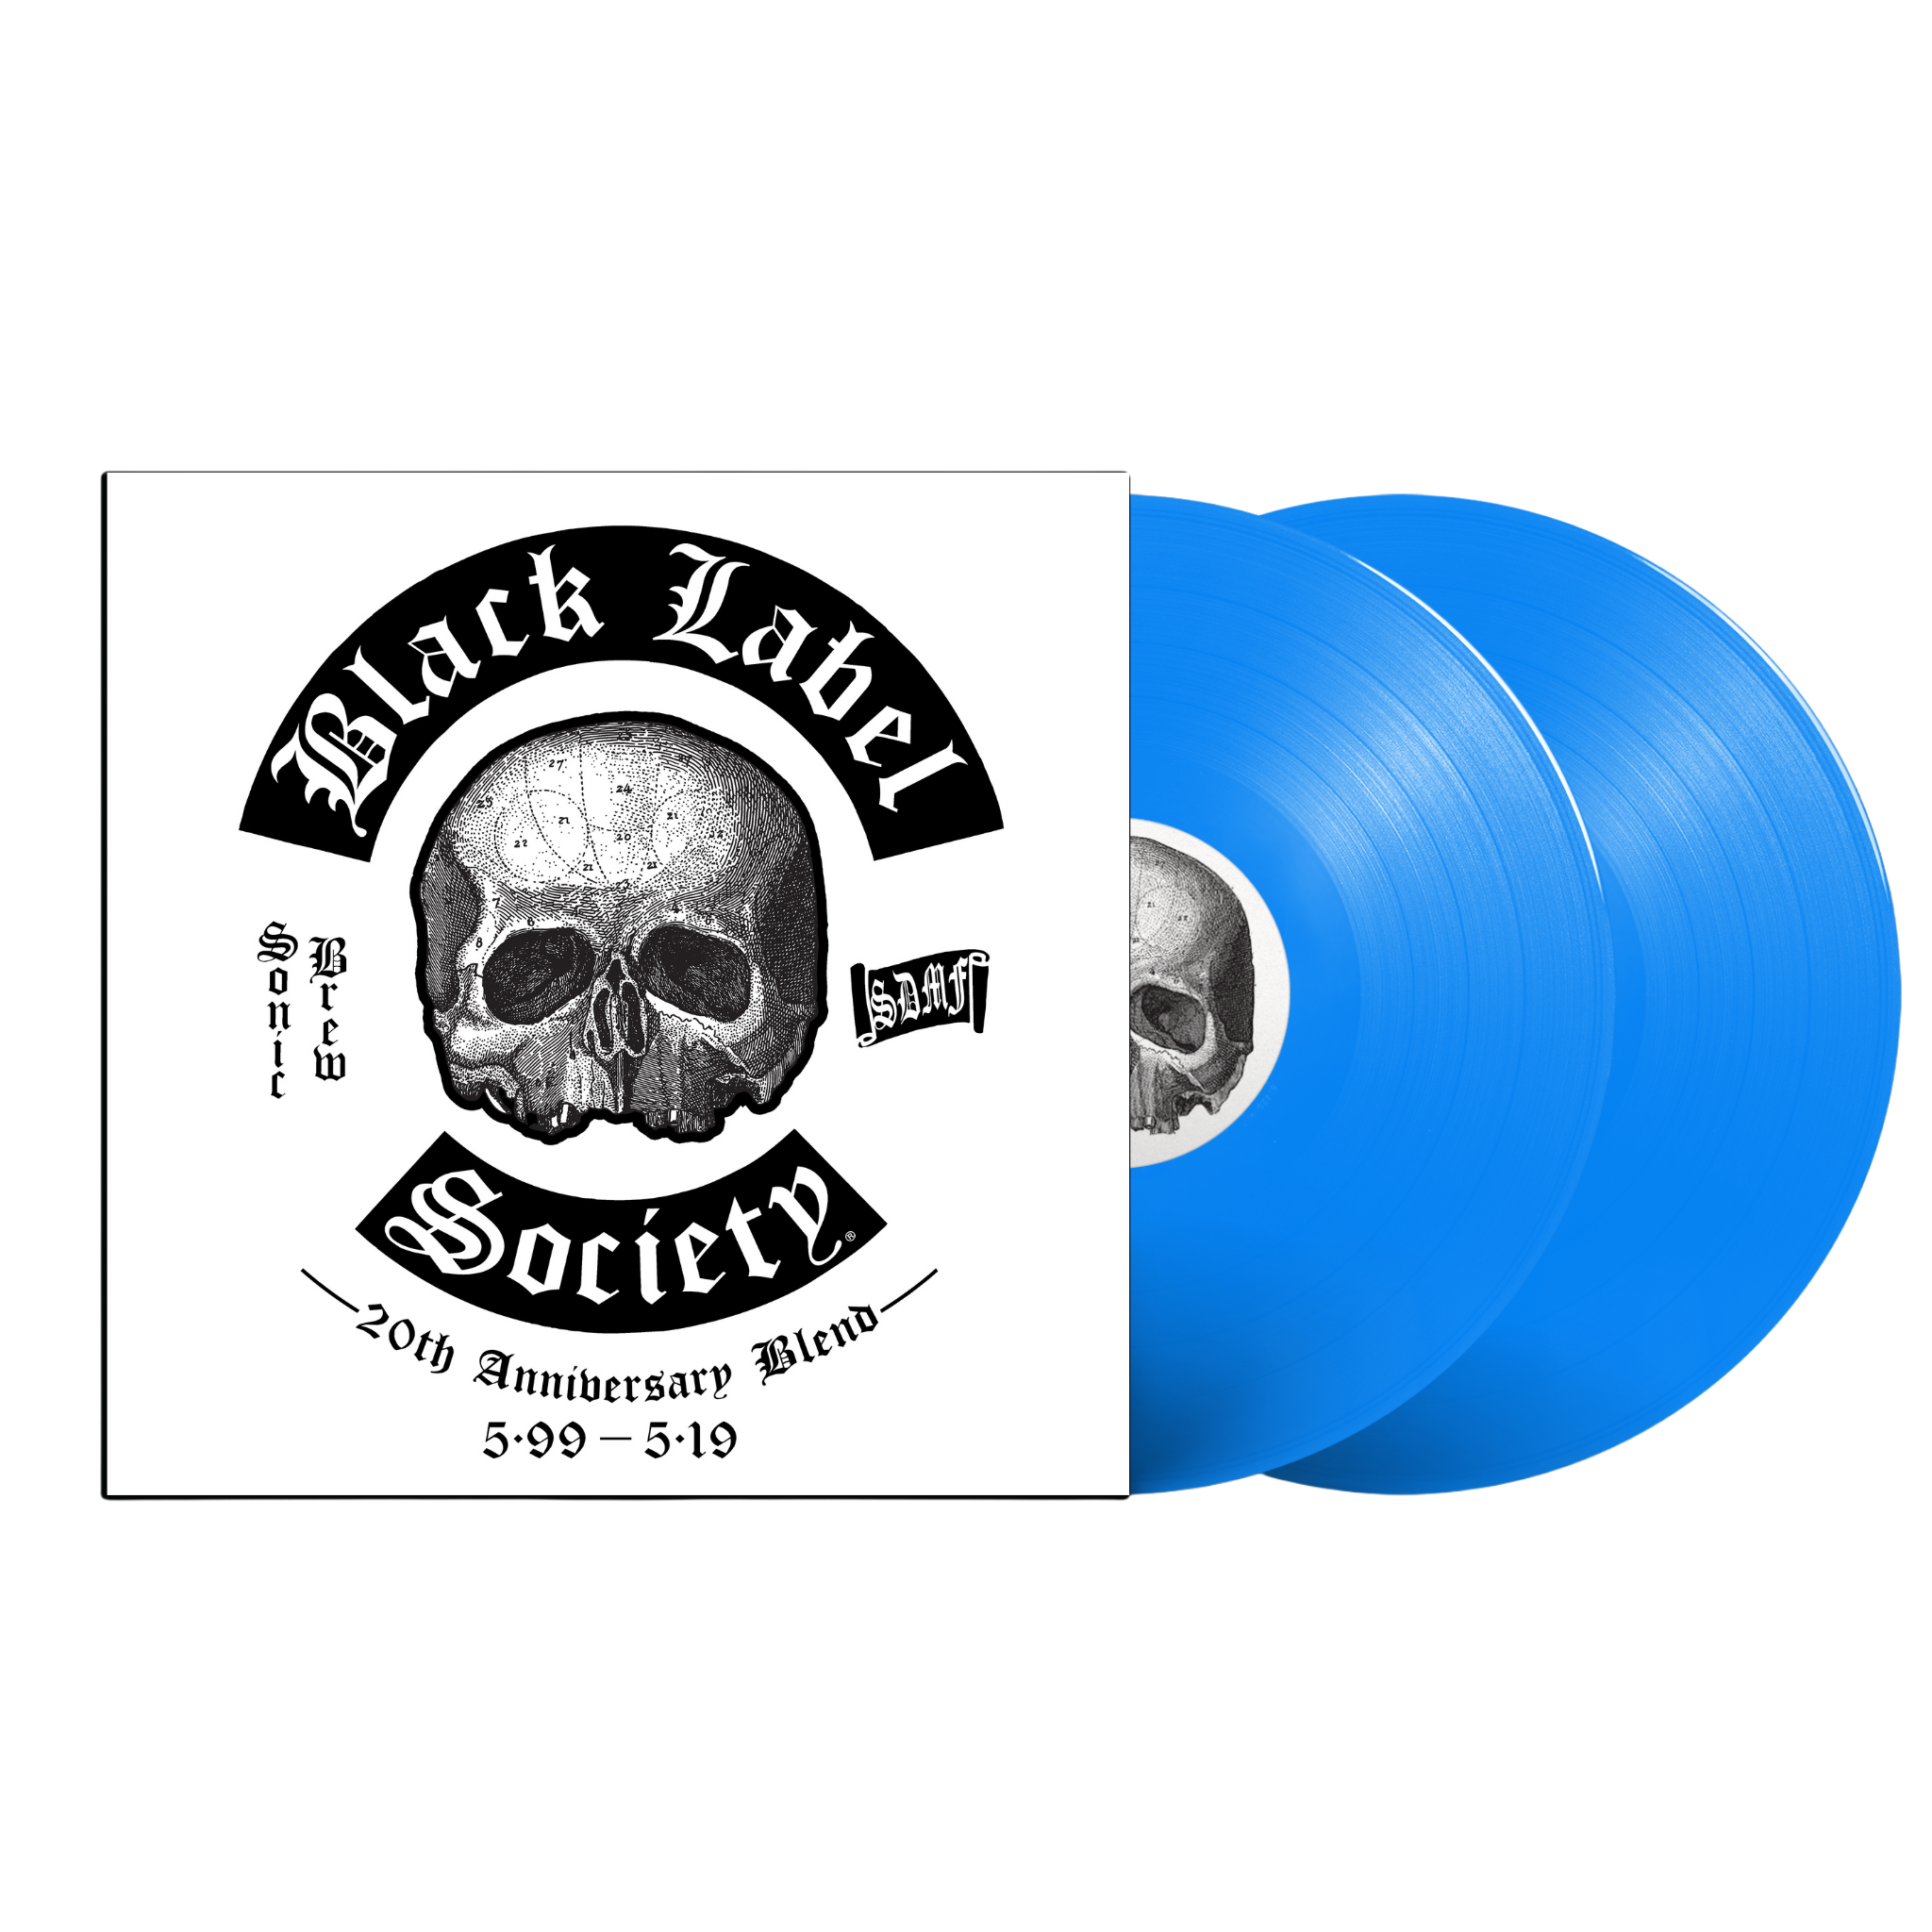 Black Label Society - Sonic Brew 20th Anniversary Blend 5.99 - 5.19 - LP - Sky Blue Vinyl